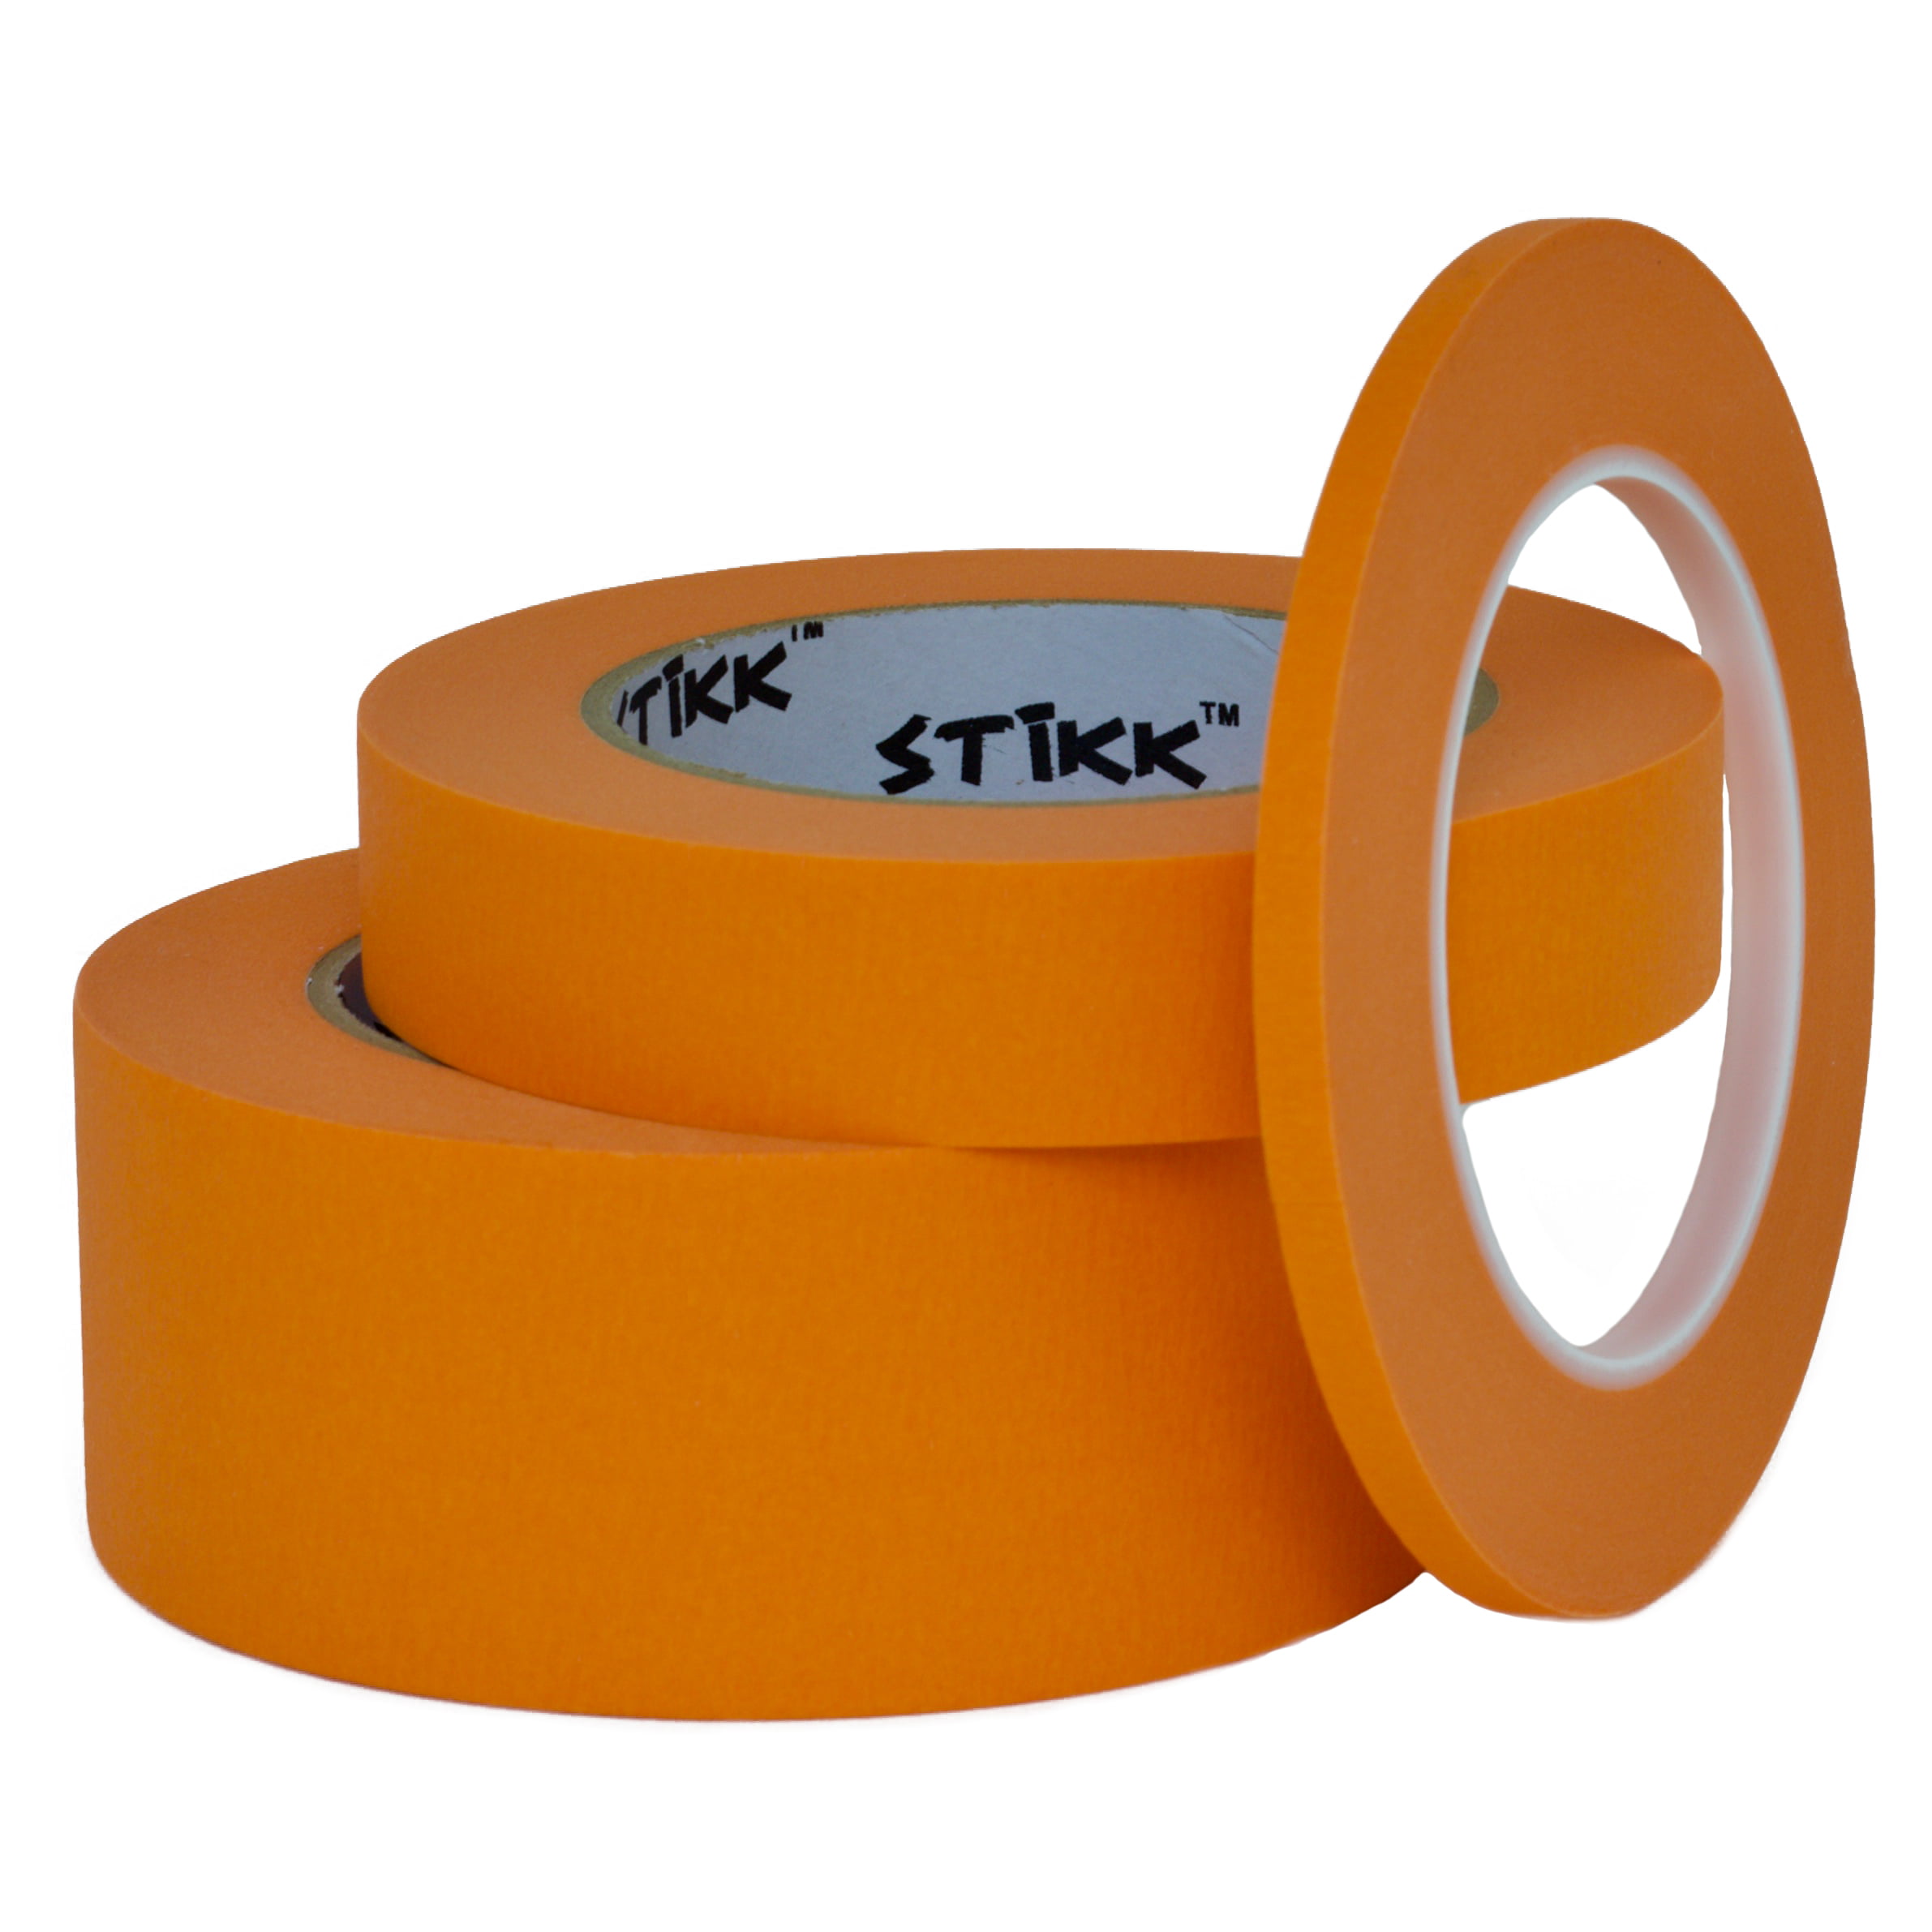 3 pack 1/4" .25 inch x 60yd Thin STIKK Yellow Painters Masking Tape 6mm x 55m 